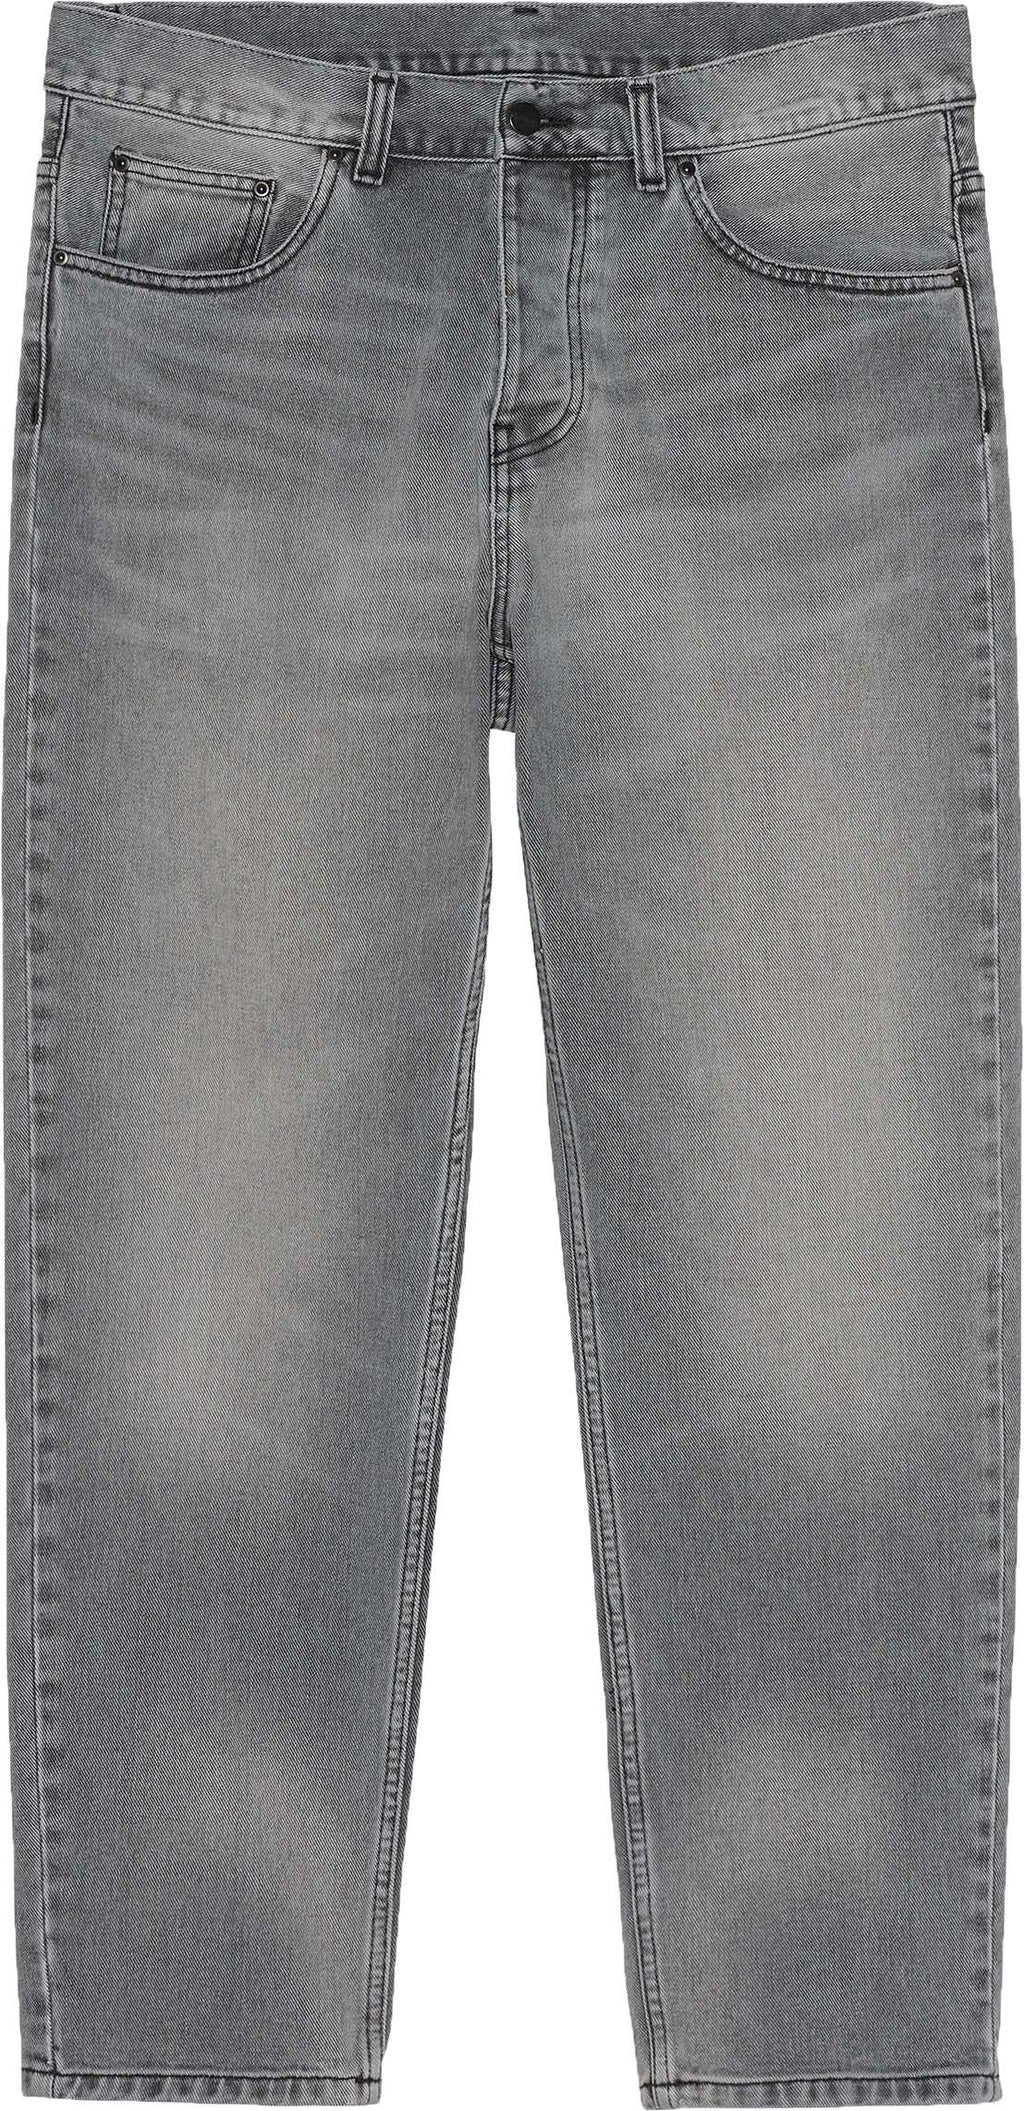  Carhartt Wip Jeans Newel Pant Black Light Used Wash Grigio Uomo - 1